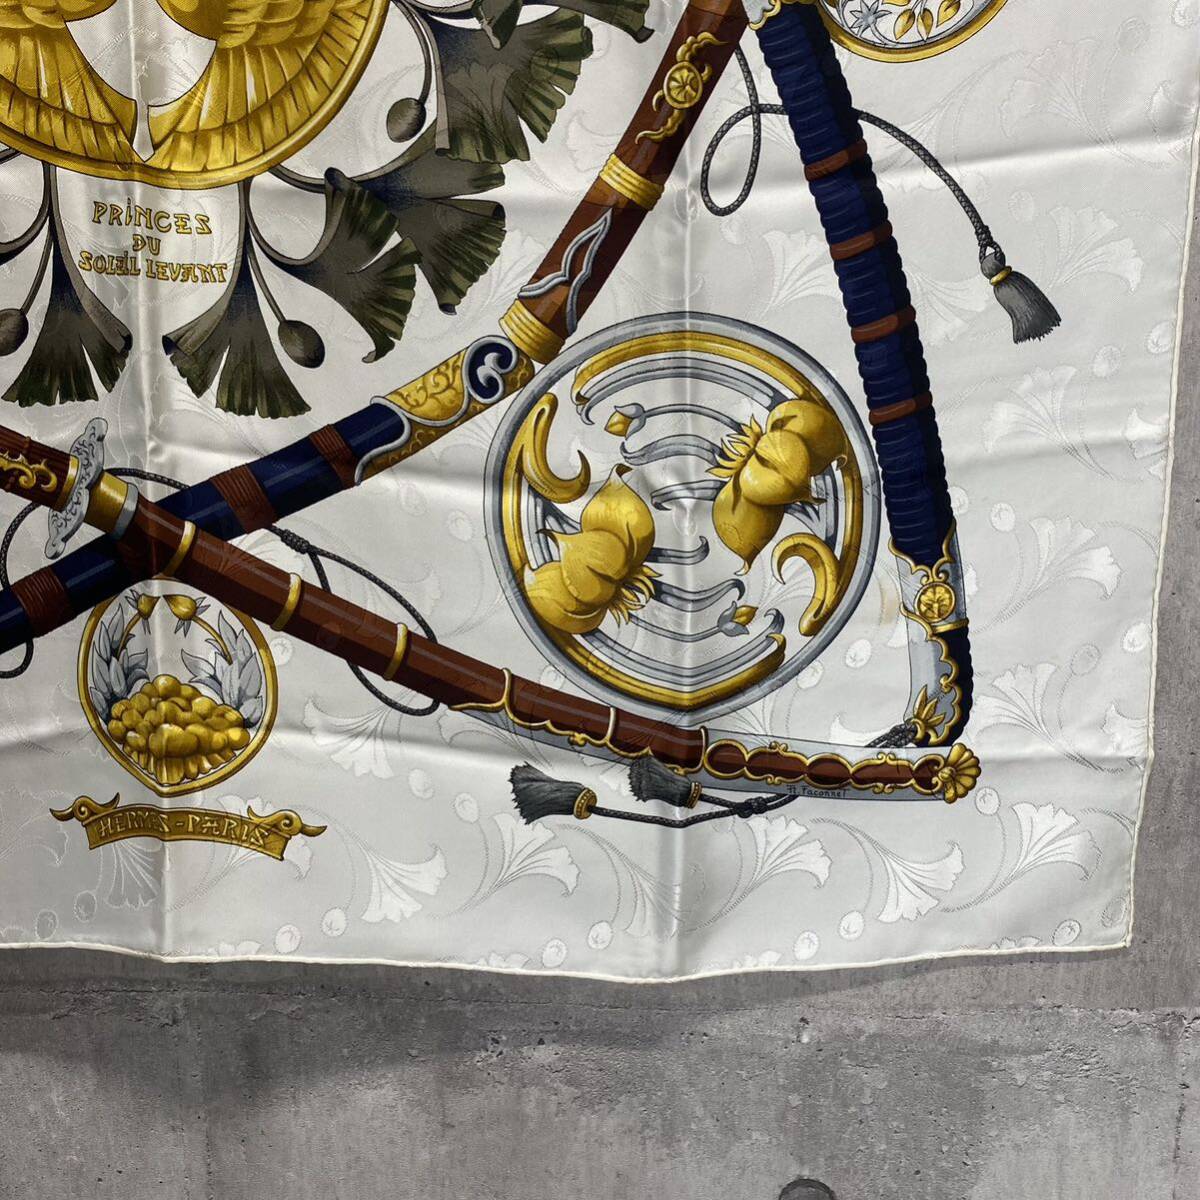 HERMES エルメス スカーフ DAIMYO PRINCES DU SOLEIL LEVANT 大名日出る国の皇子 シルク P1552_画像4